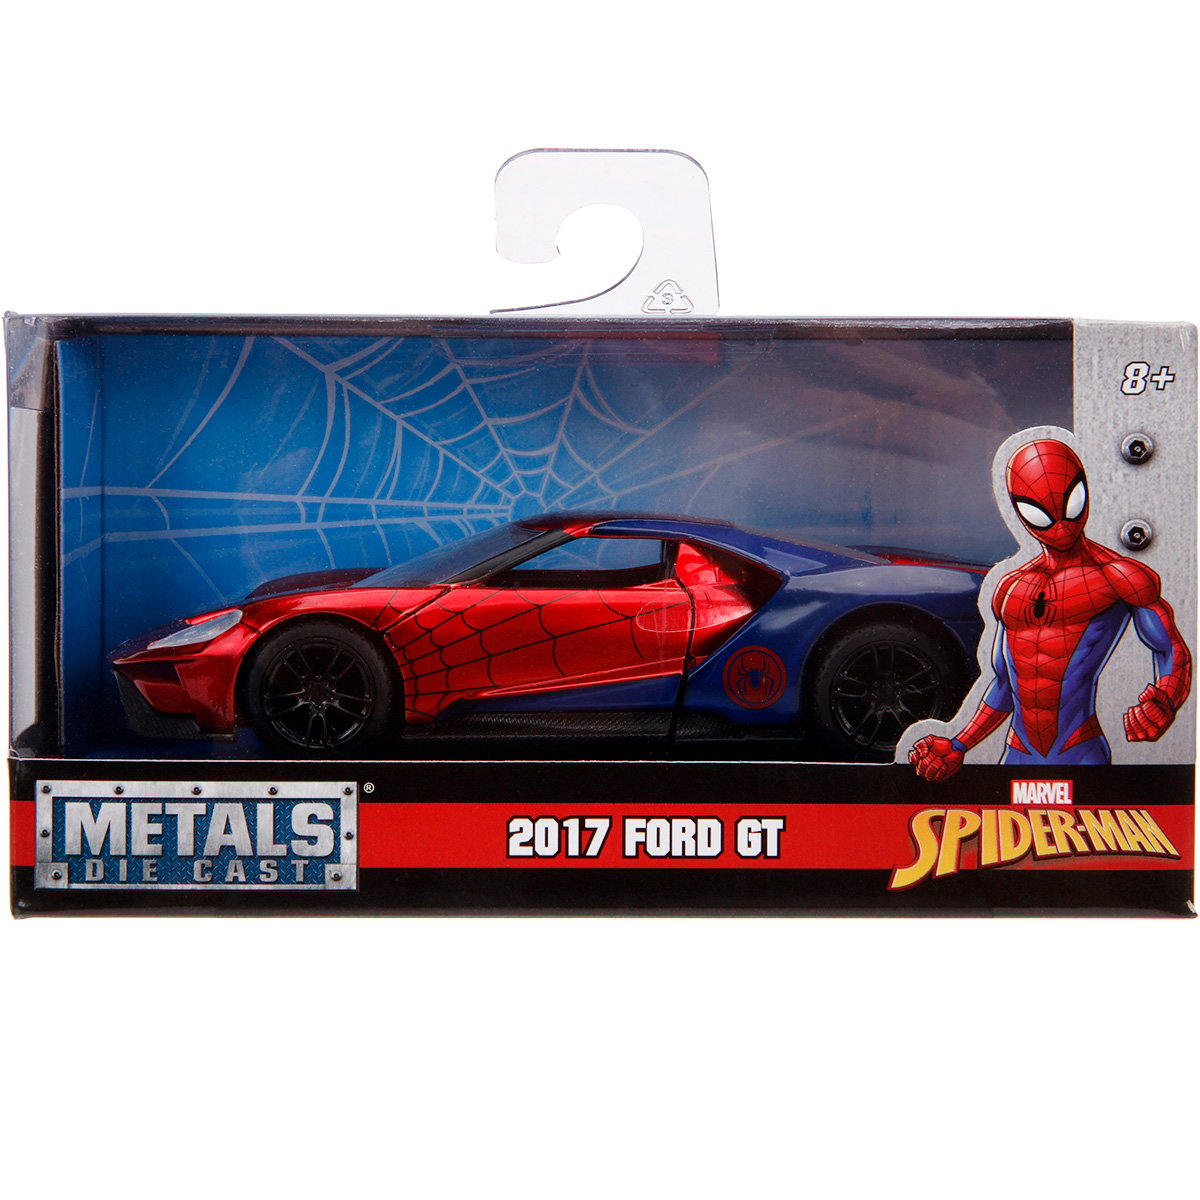 Masina din metal, Jada, Marvel Spiderman, 2017 Ford GT, 1:32